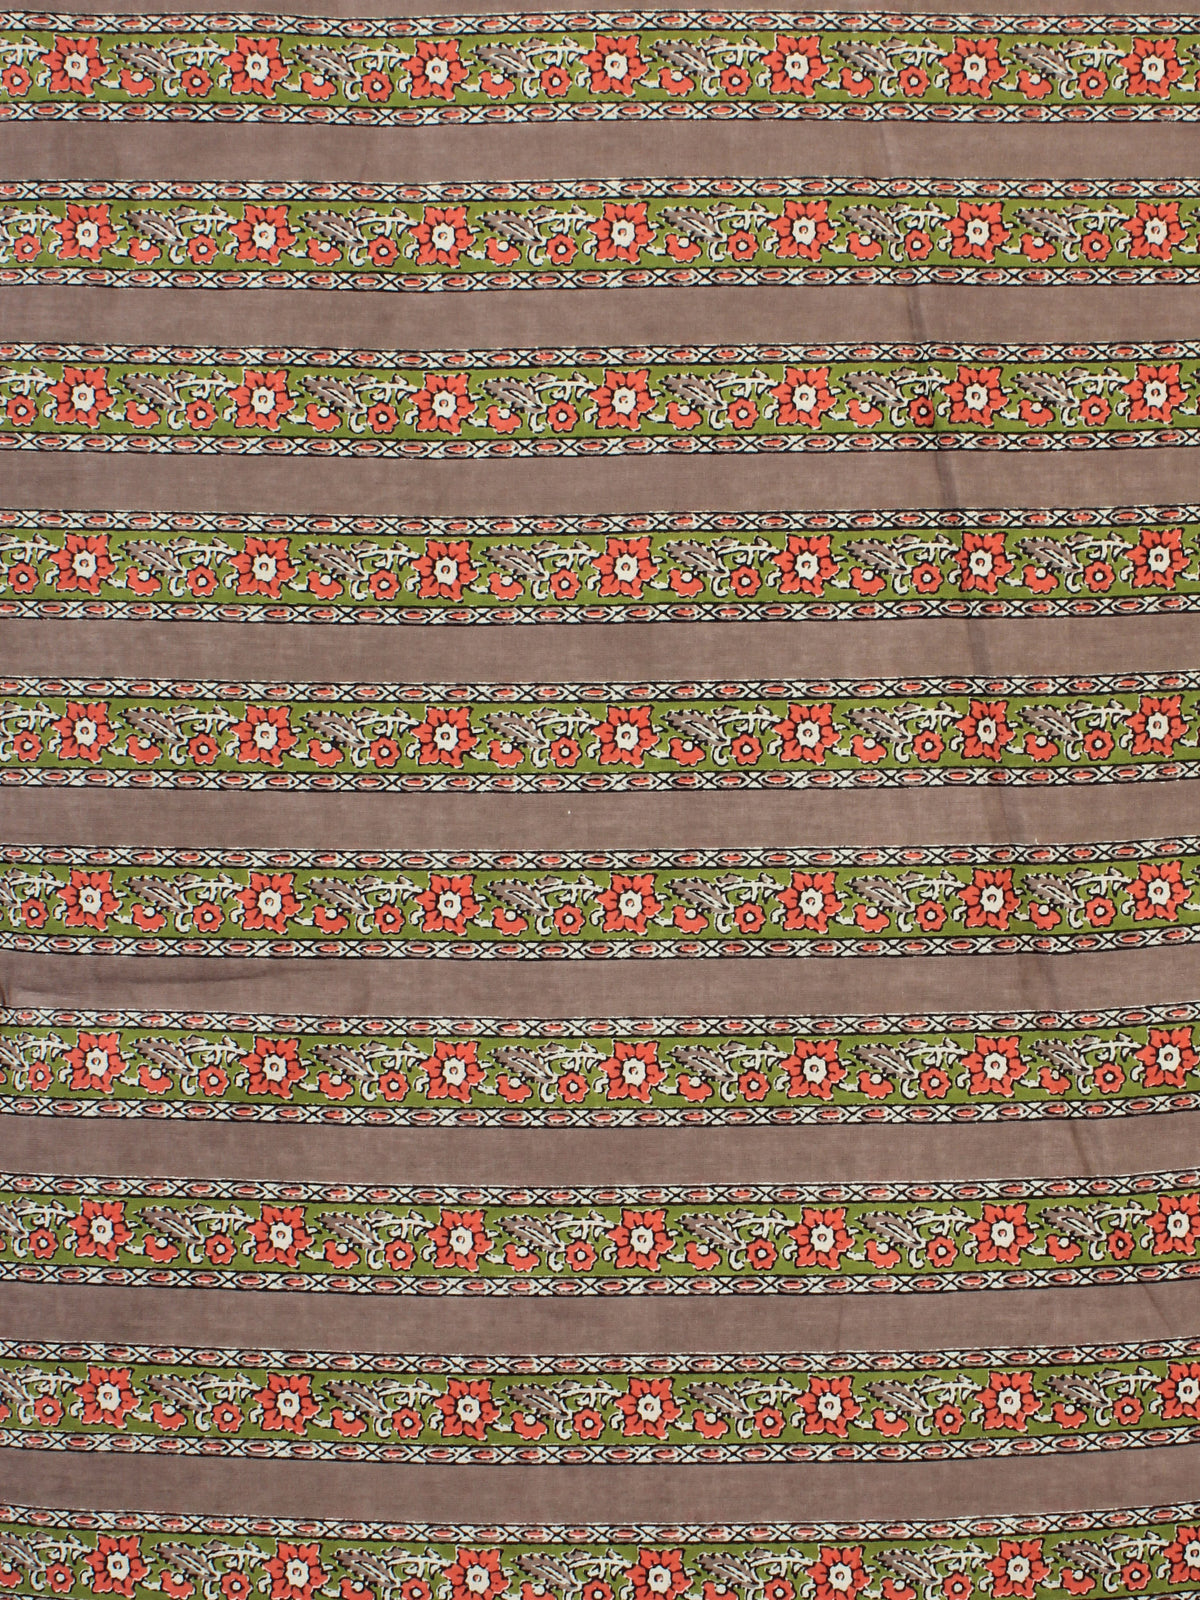 Grey Green Orange Block Printed Cotton Fabric Per Meter - F001F2250